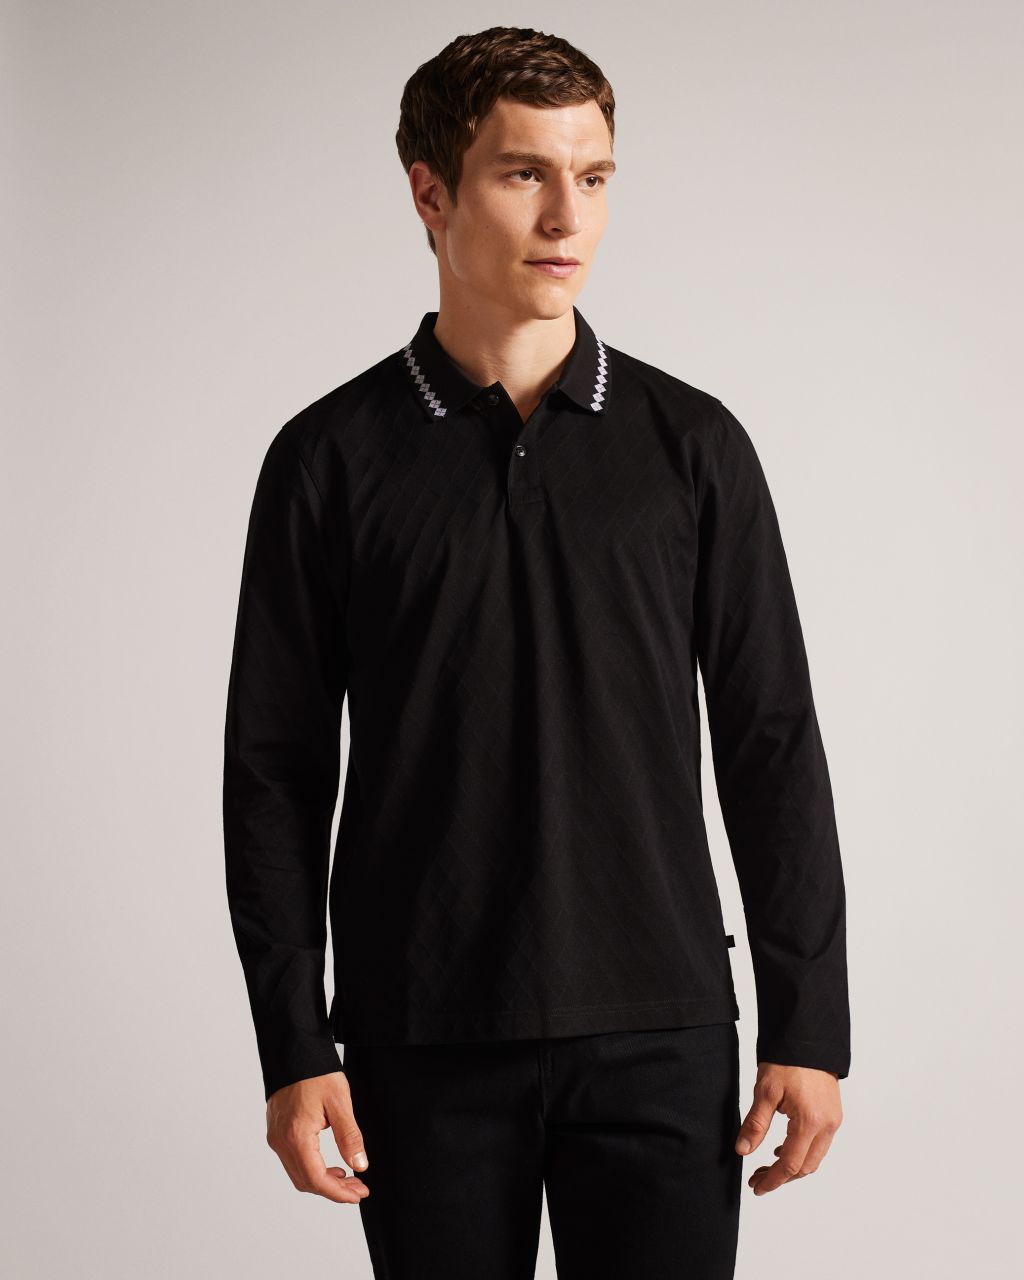 men's long sleeve argyle polo shirt in black, holrood, cotton